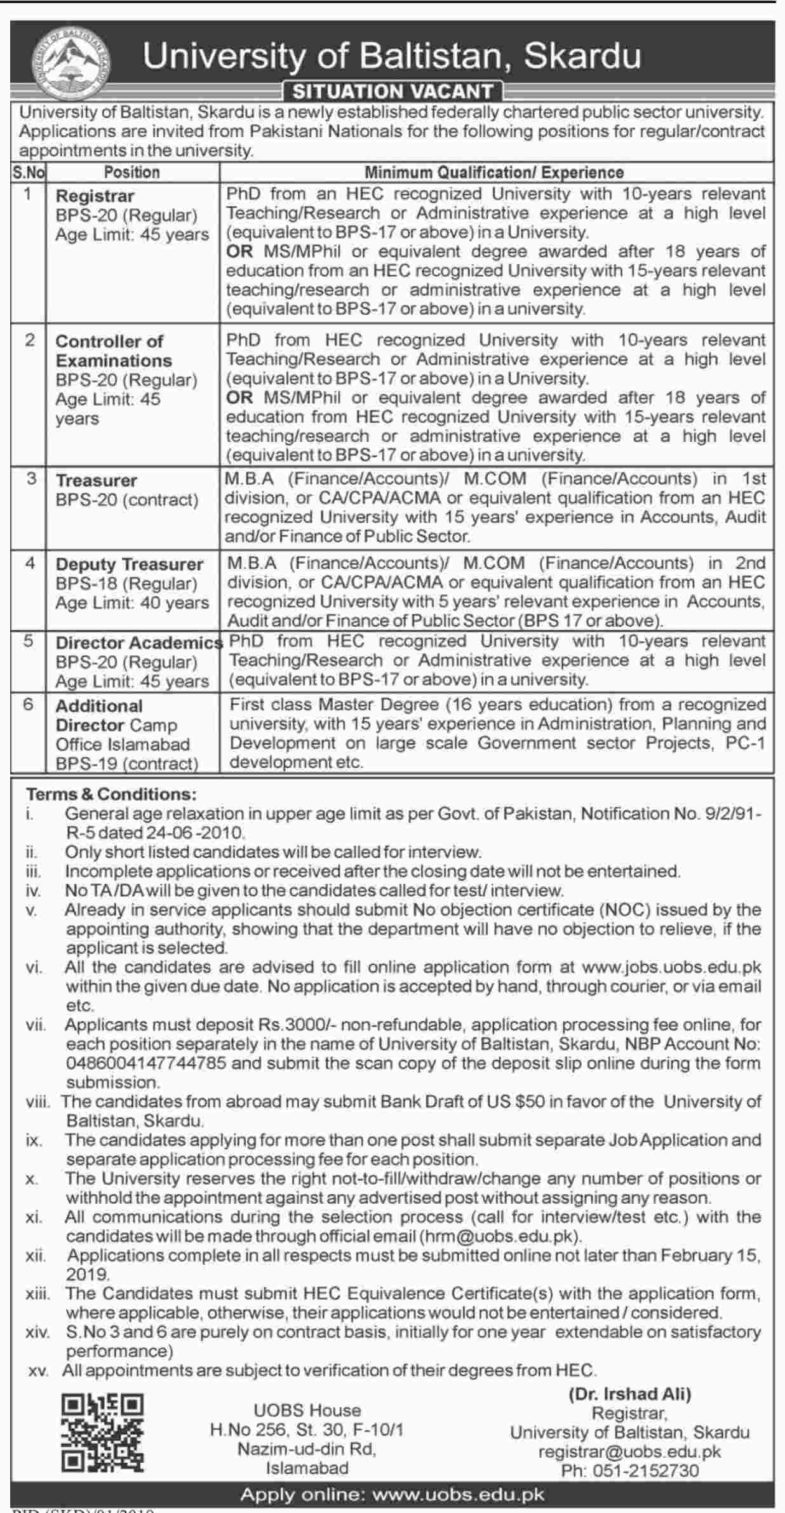 University of Baltistan Skardu Jobs 2019 for Treasurer, Registrar, Controller Examination & Management Posts